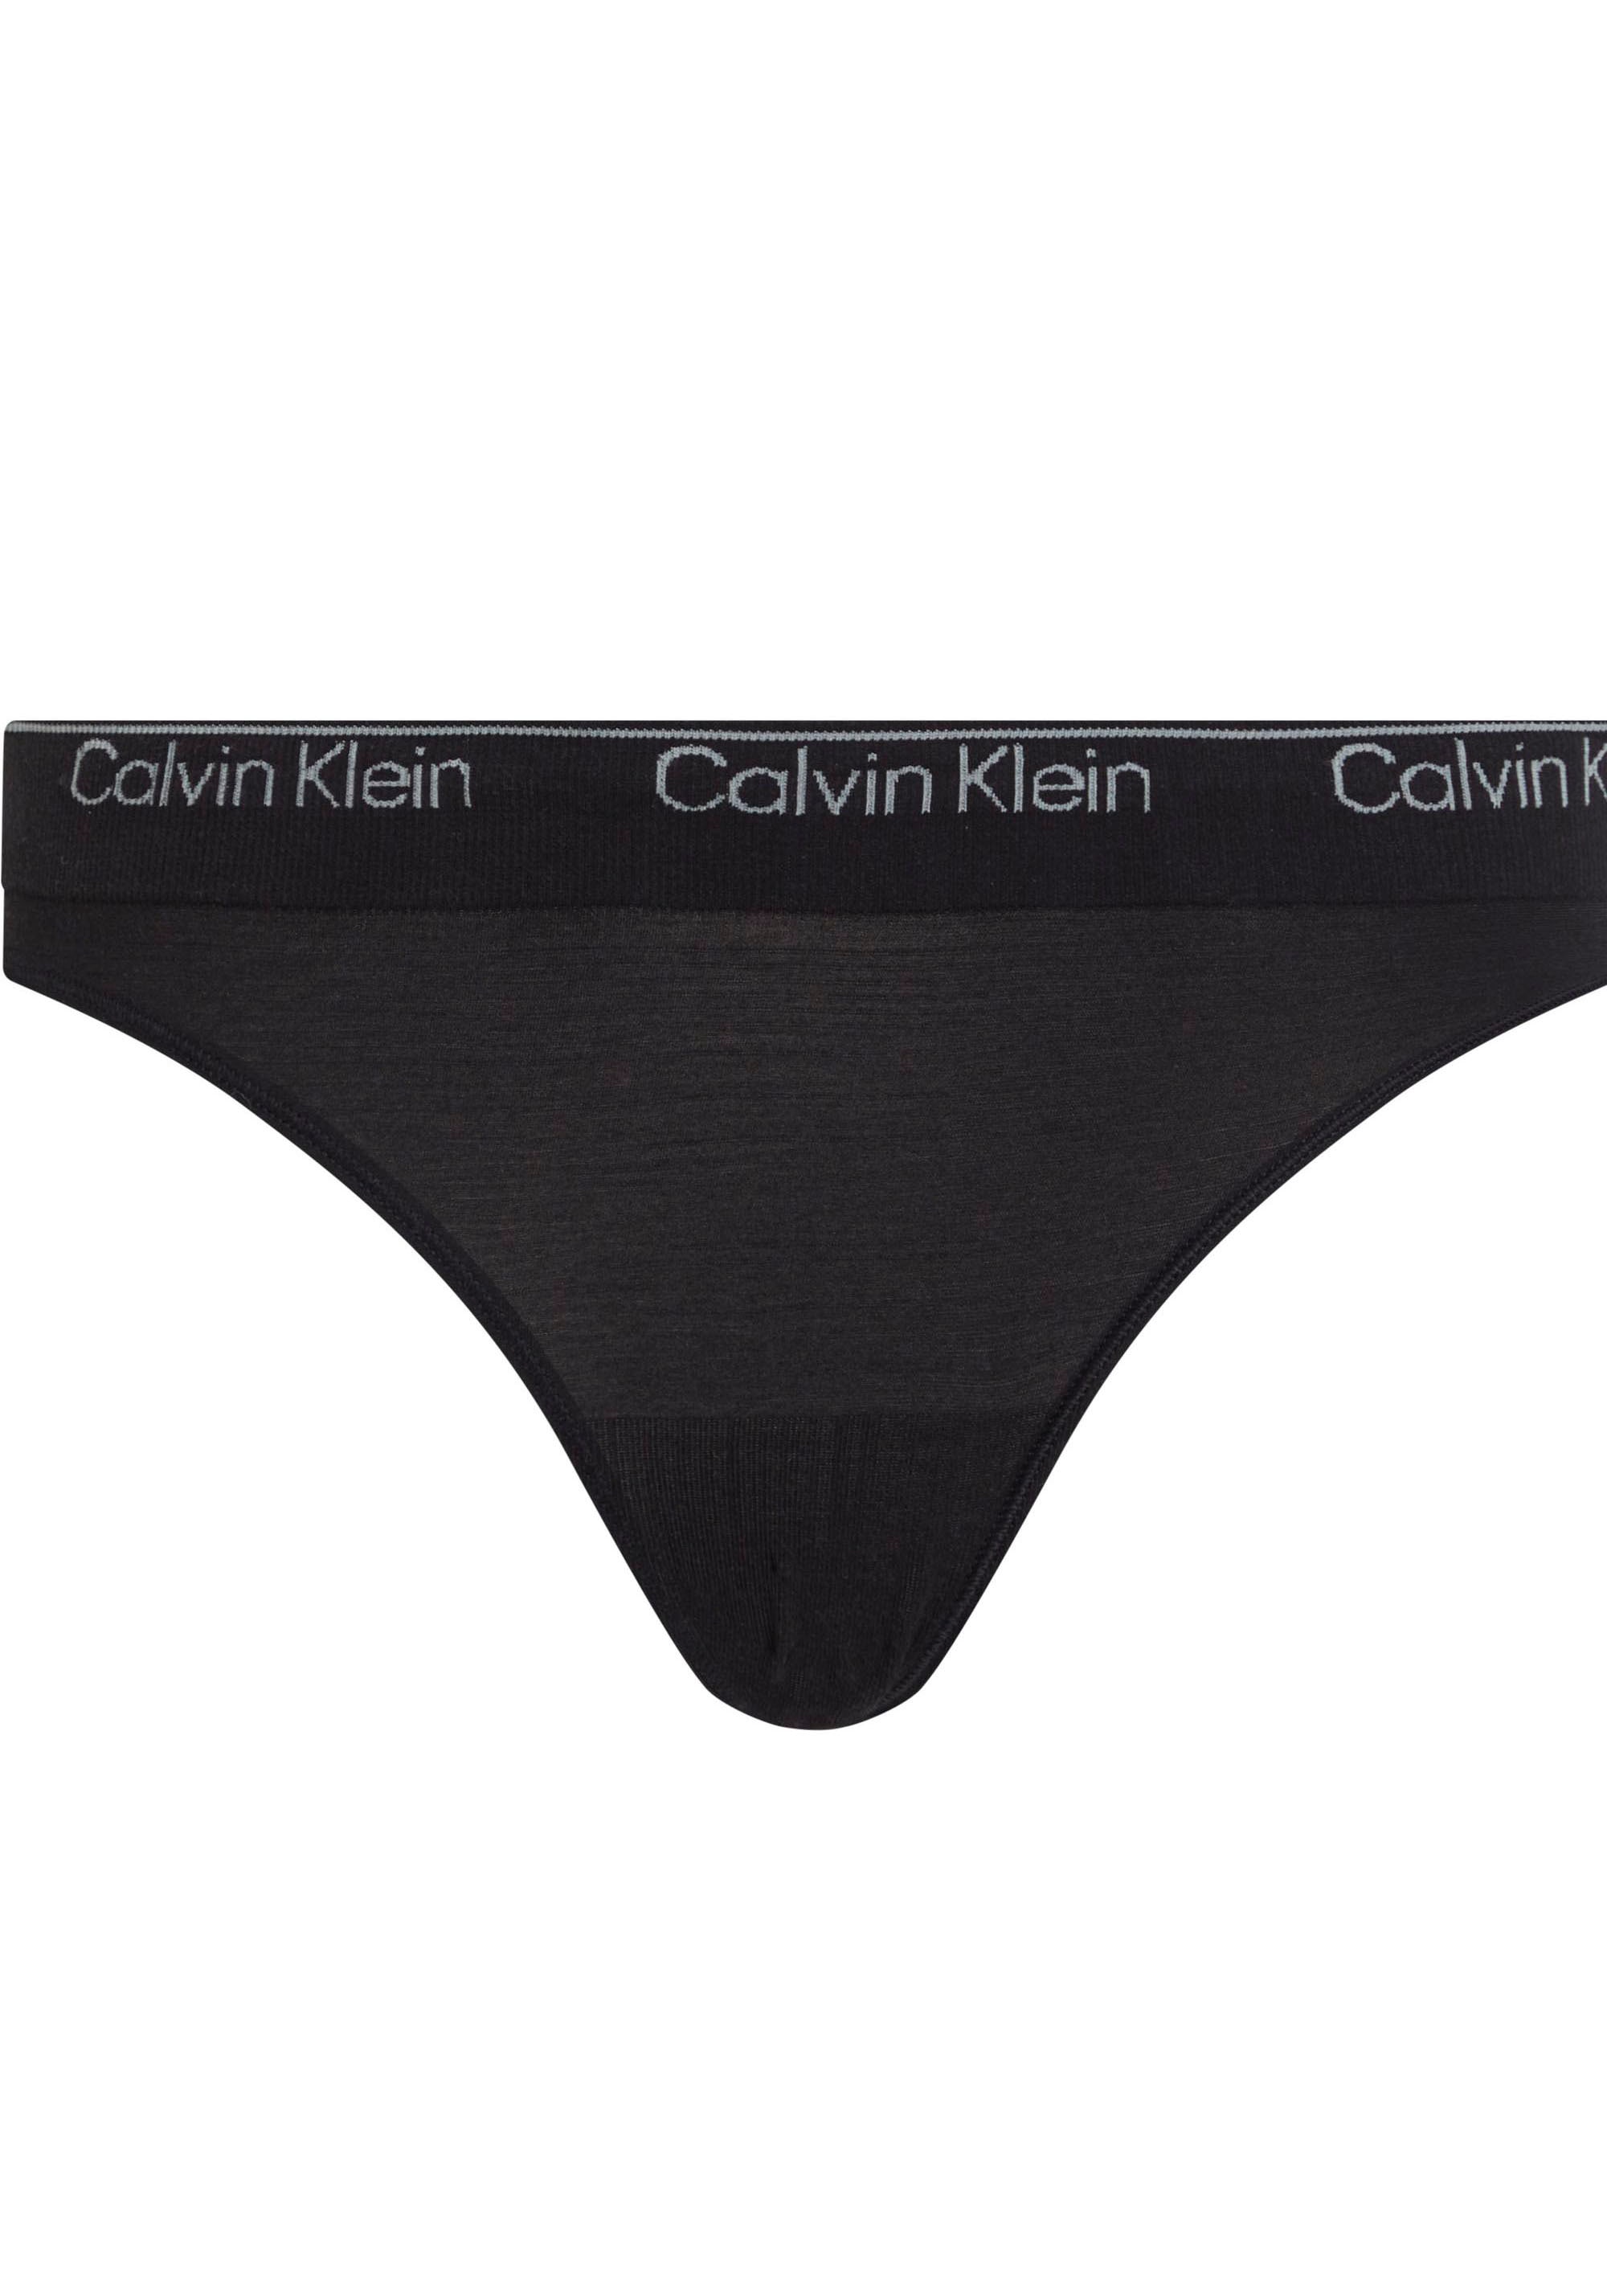 CK-Logo ♕ bei »BIKINI«, Calvin Klein Bund Bikinislip mit am